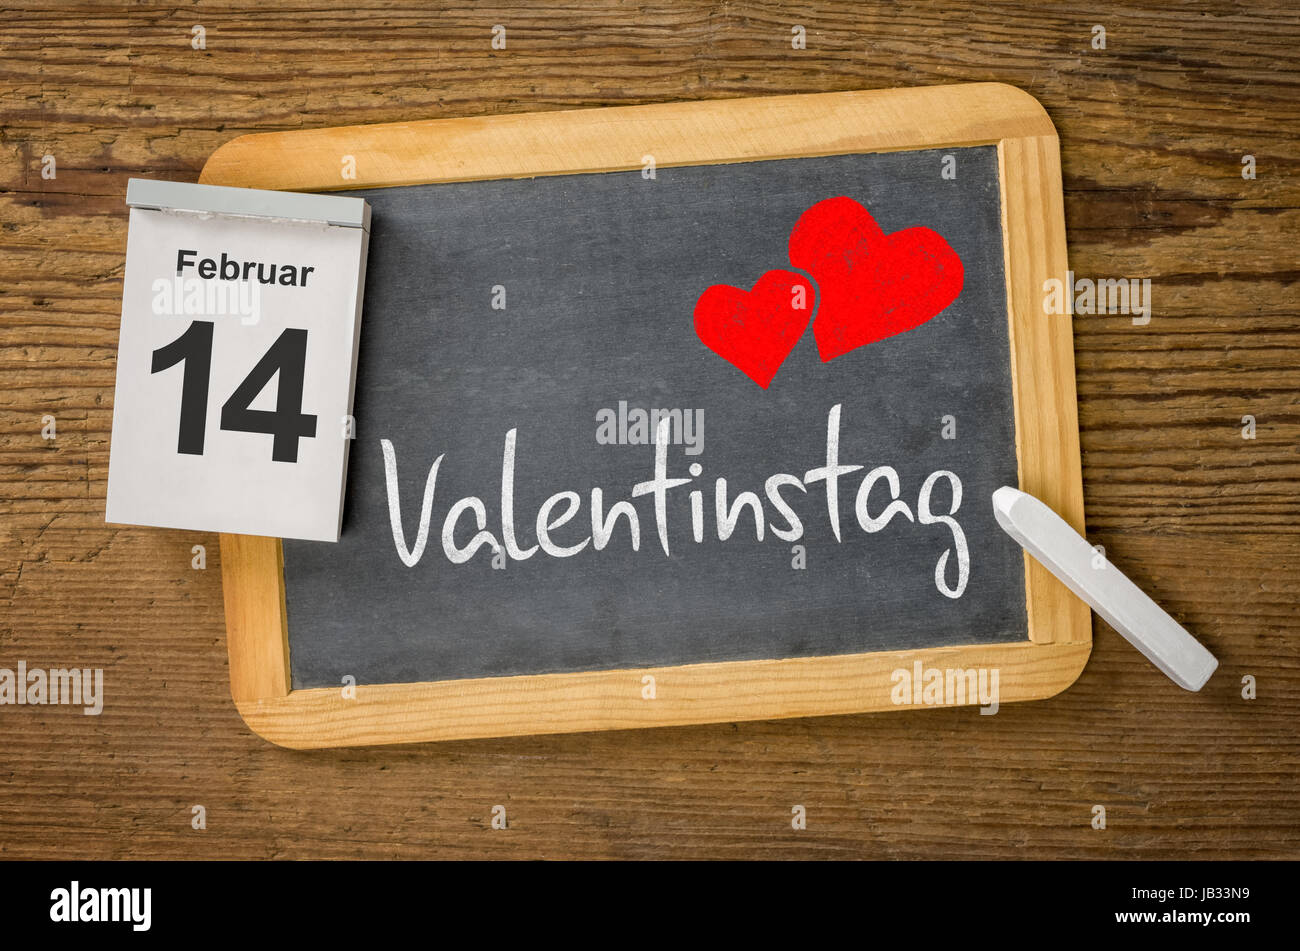 Am 14 Februar Ist Valentinstag Stock Photo Alamy